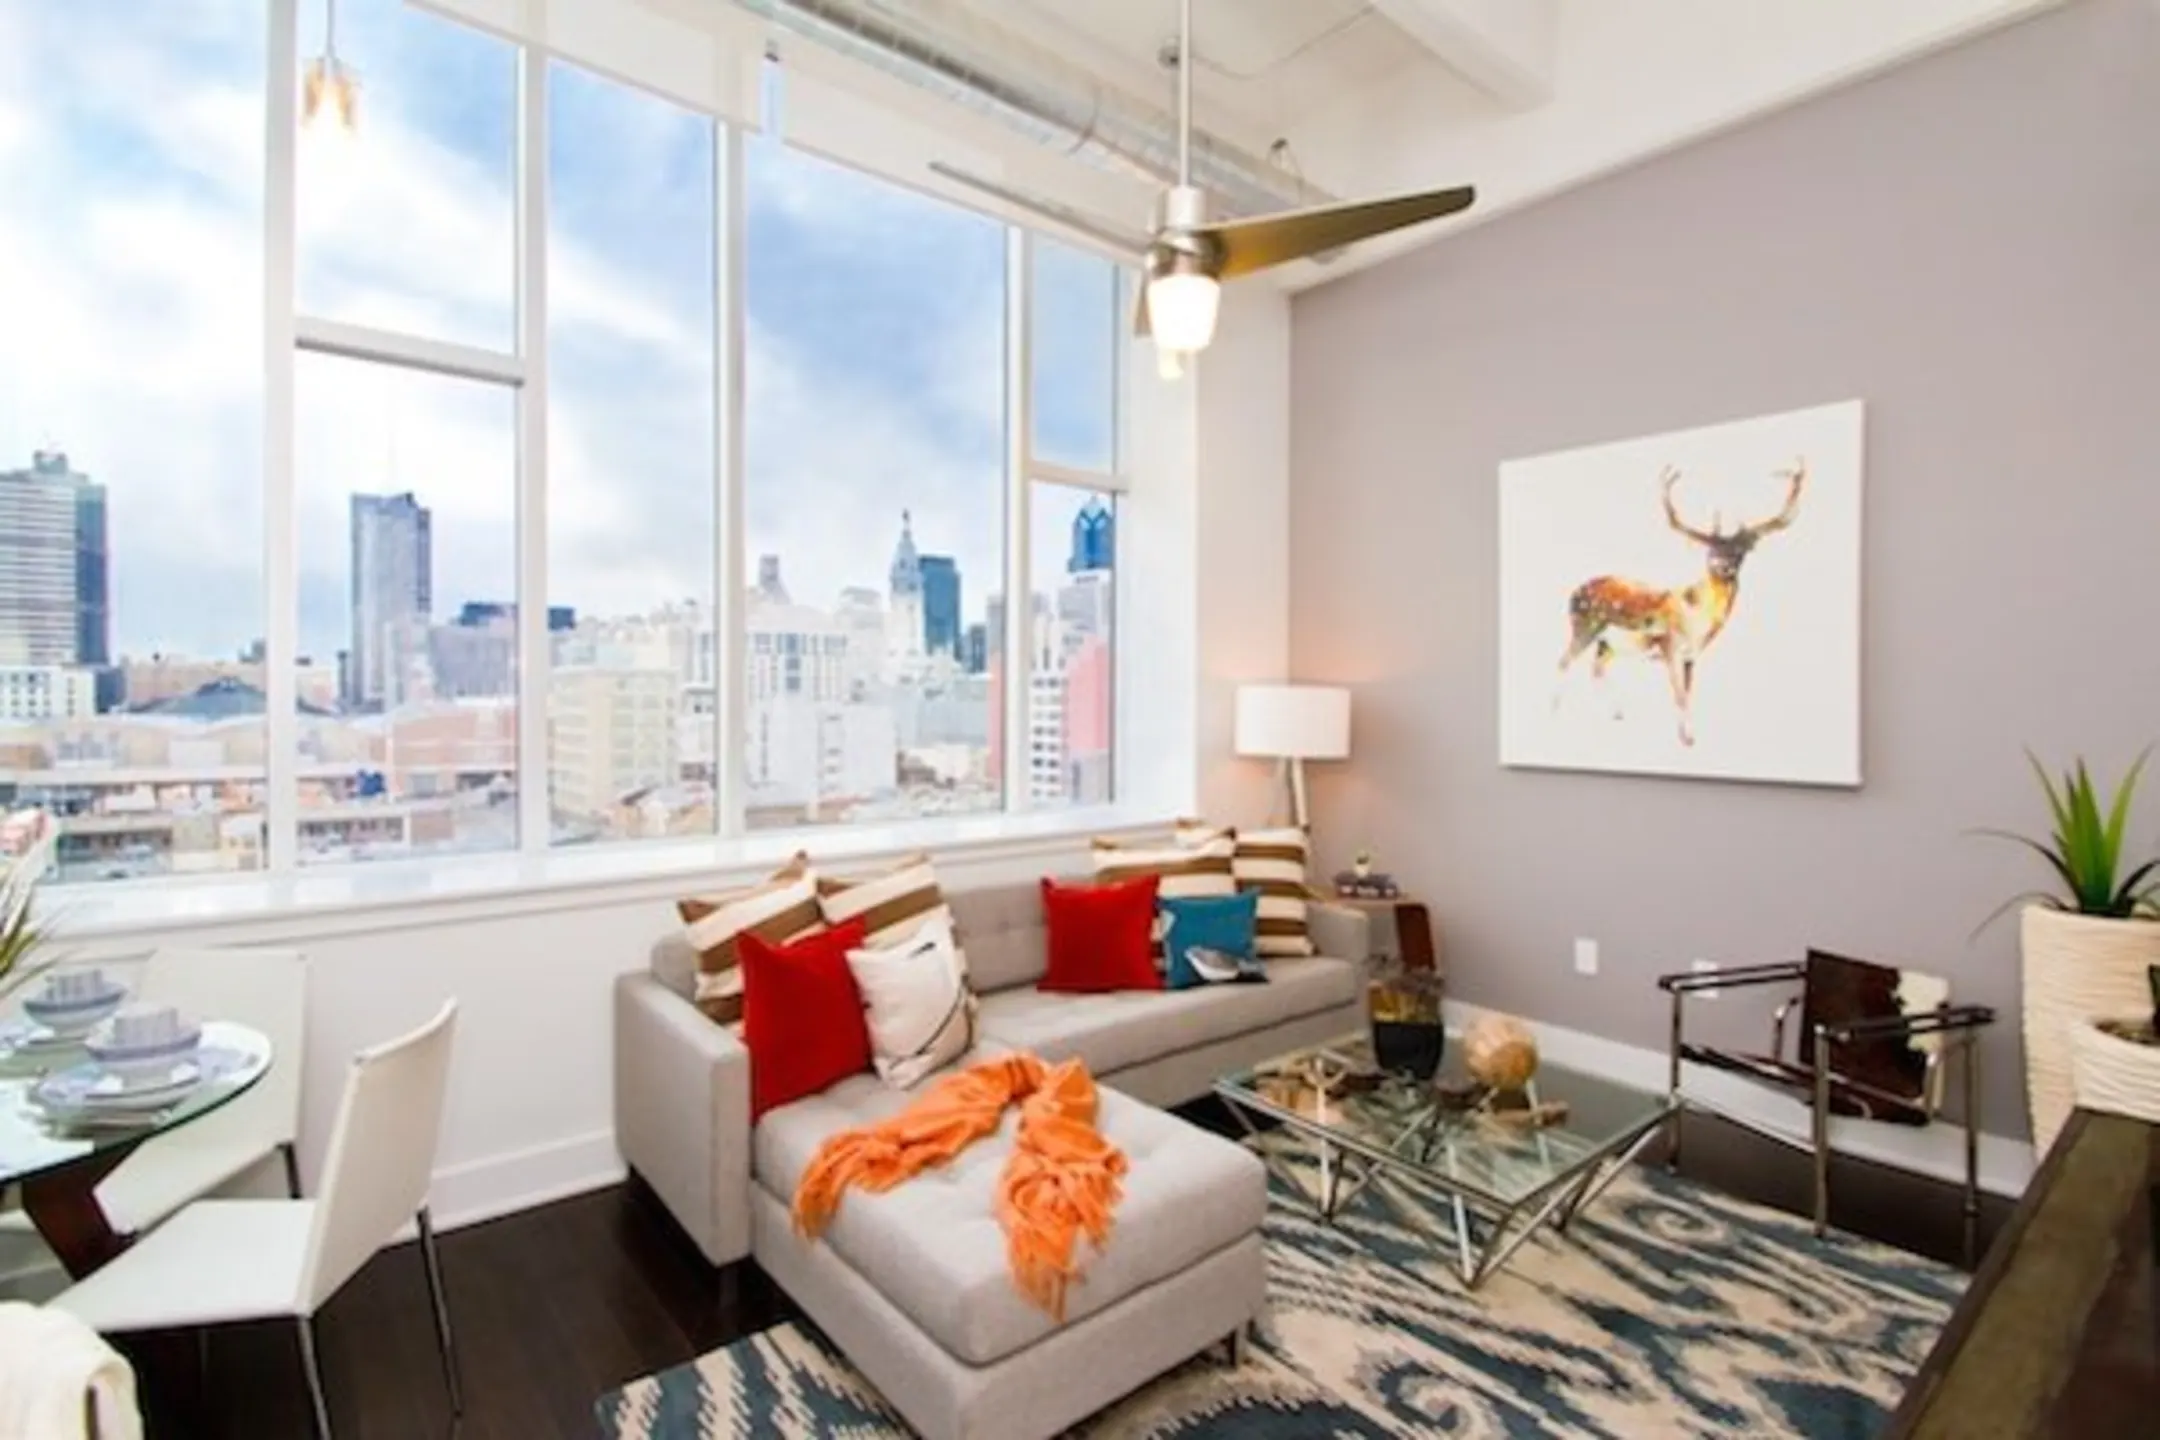 Living Room - Goldtex Apartments - Philadelphia, PA